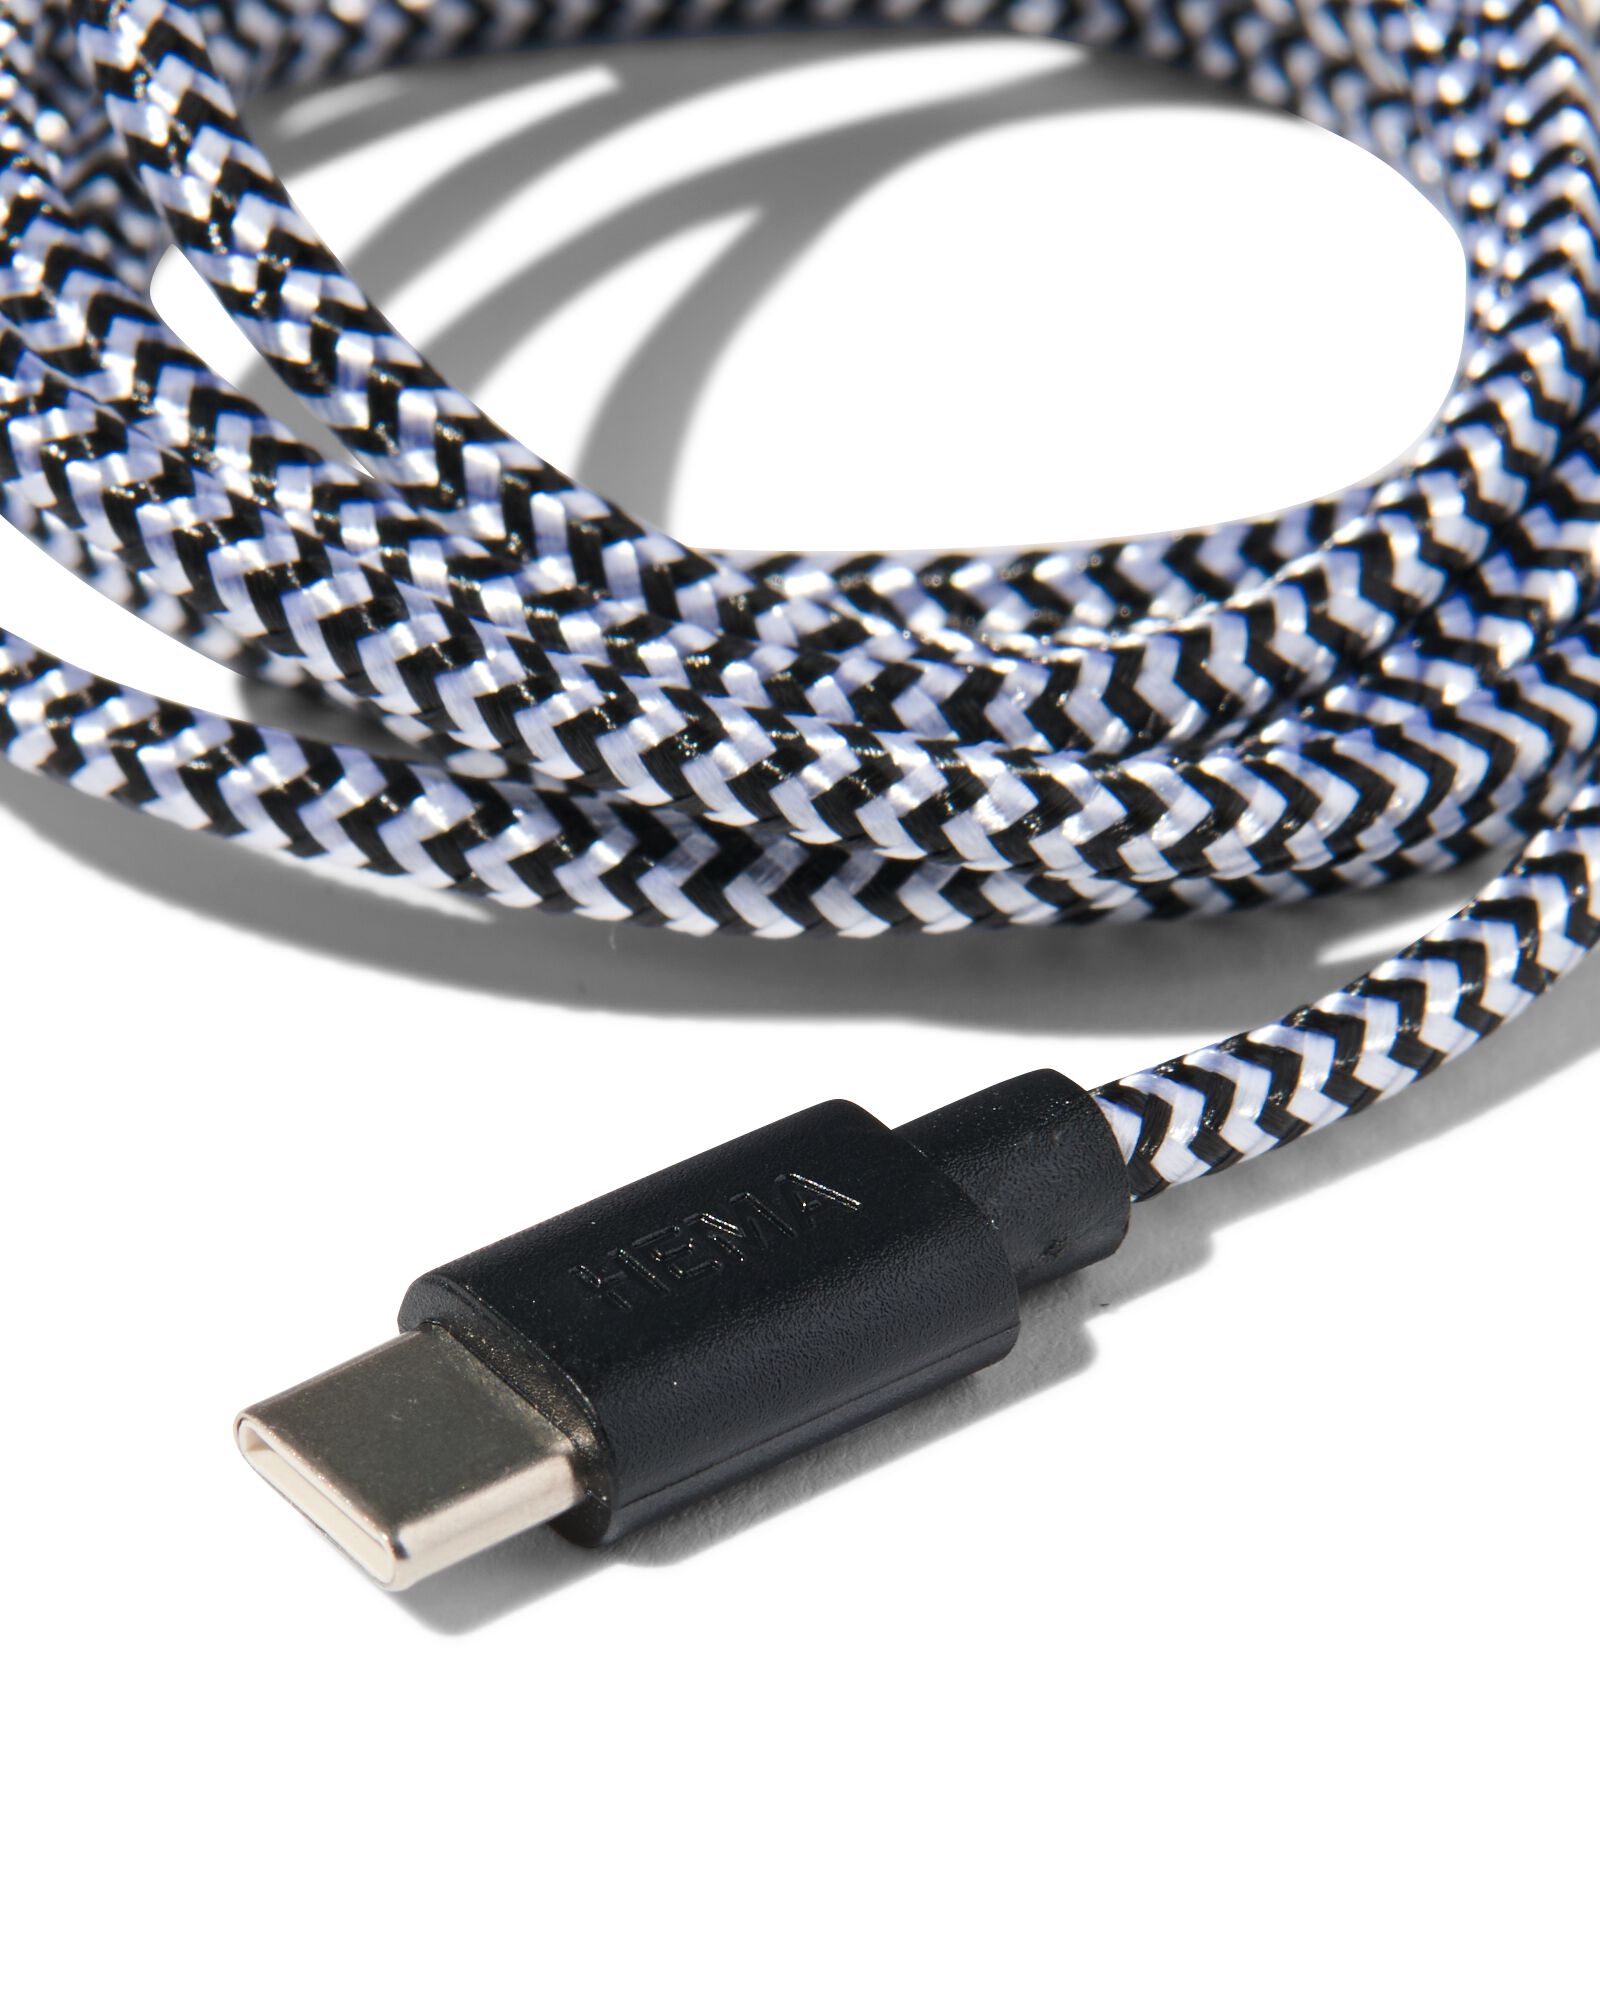 laadkabel USB/USB-C 1.5m - 39630175 - HEMA